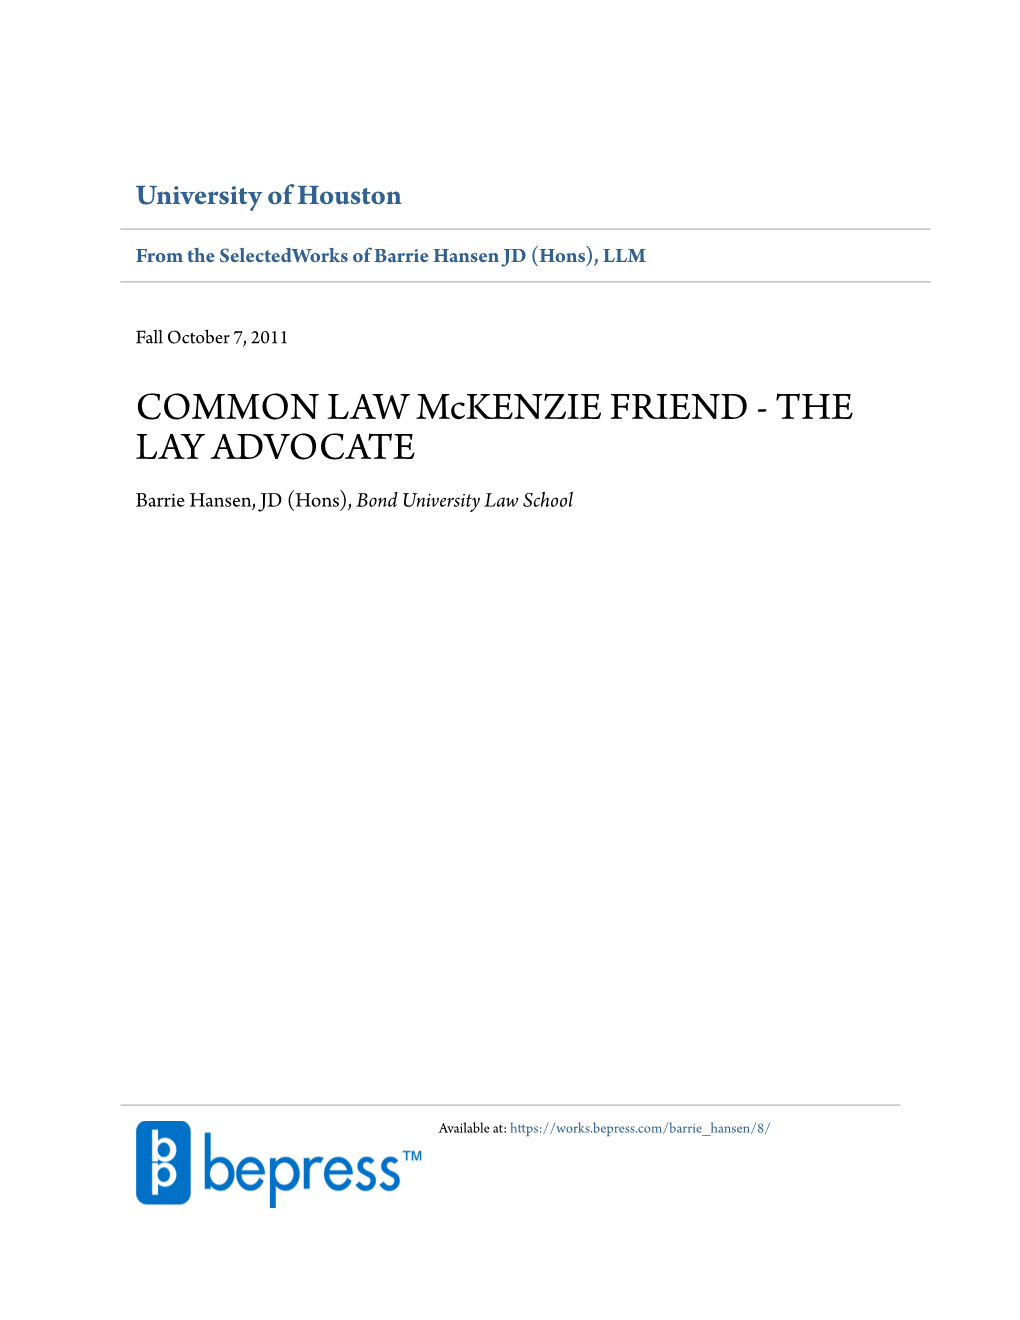 COMMON LAW Mckenzie FRIEND - the LAY ADVOCATE Barrie Hansen, JD (Hons), Bond University Law School